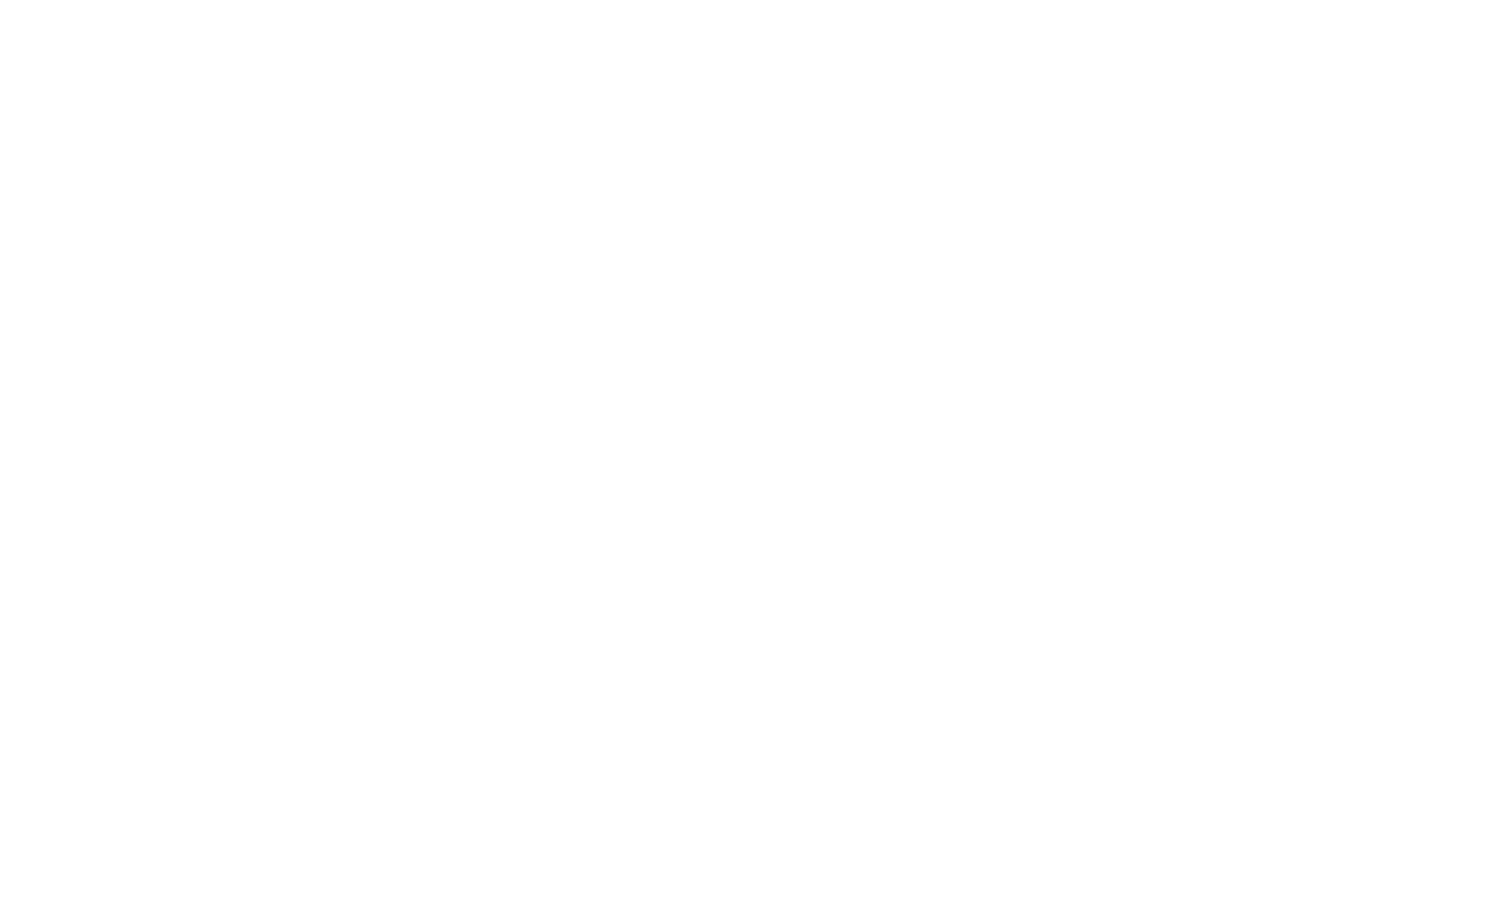 NARROW ROAD PRODUCTIONS